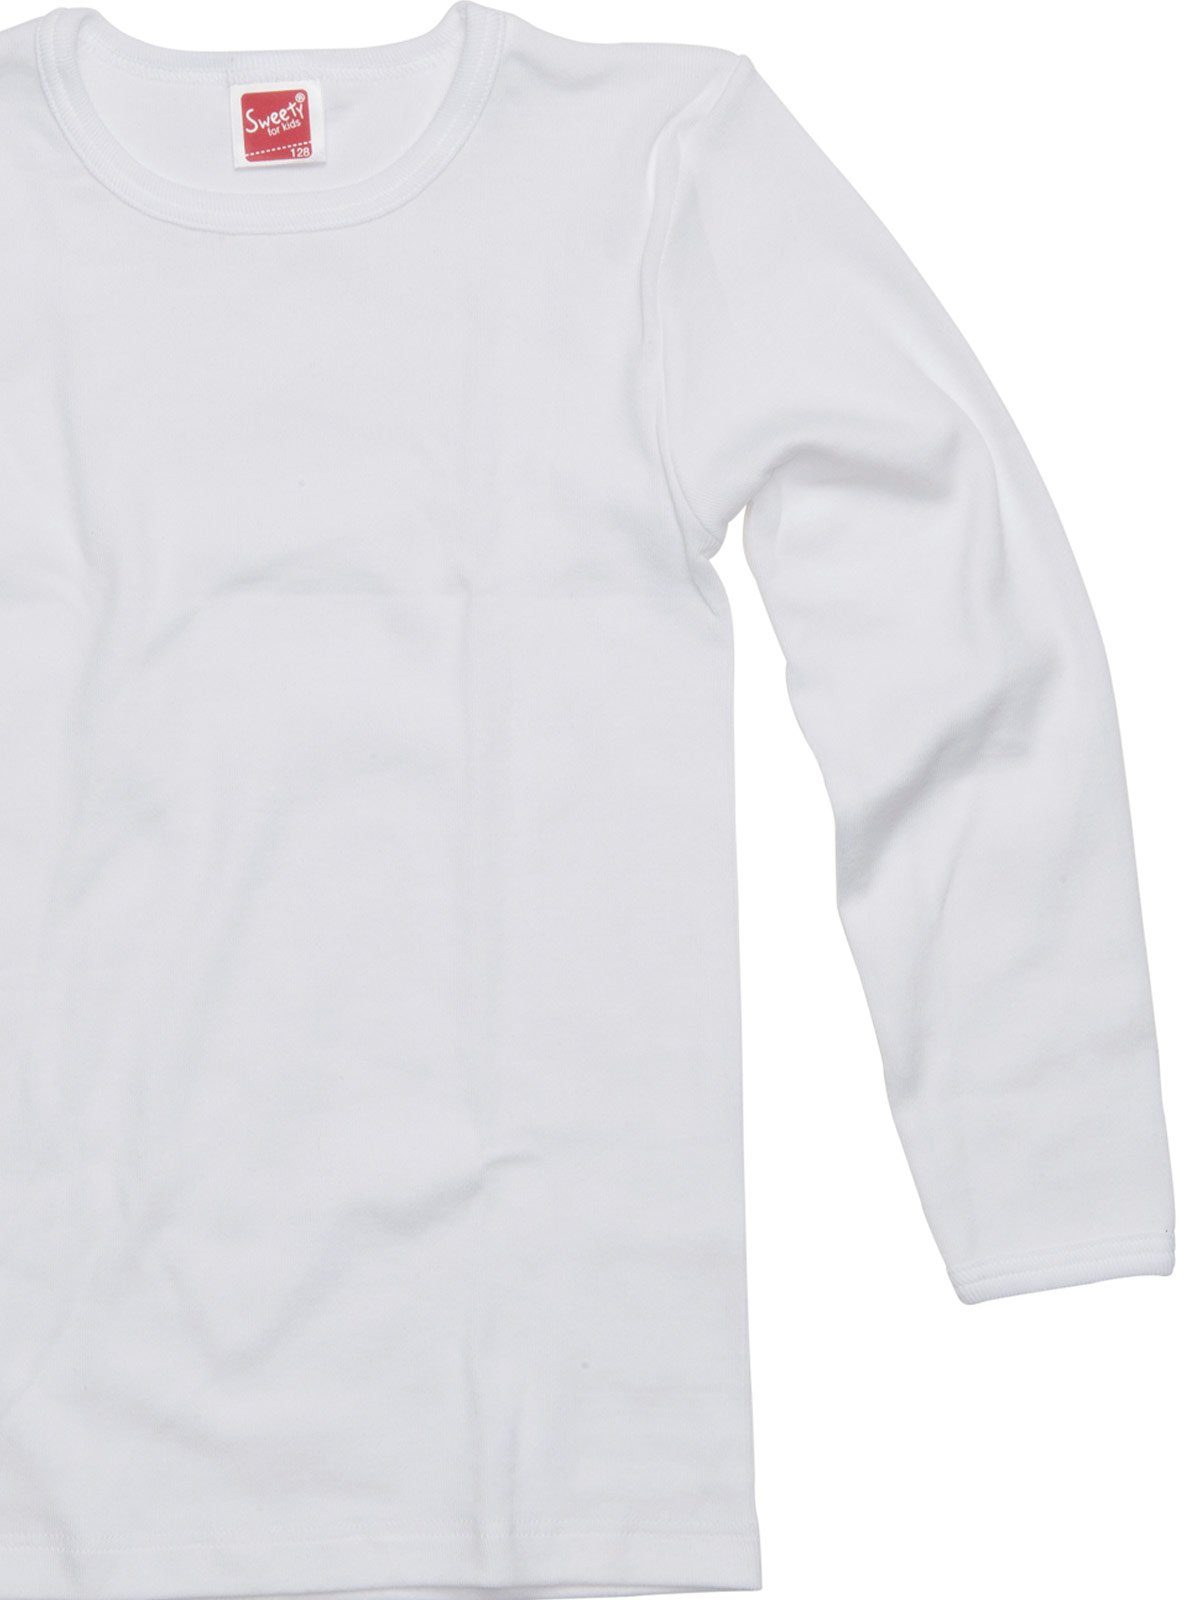 Kids Markenqualität for Kinder Sweety Winterwäsche (Stück, 1-St) Achselhemd Shirt hohe weiss